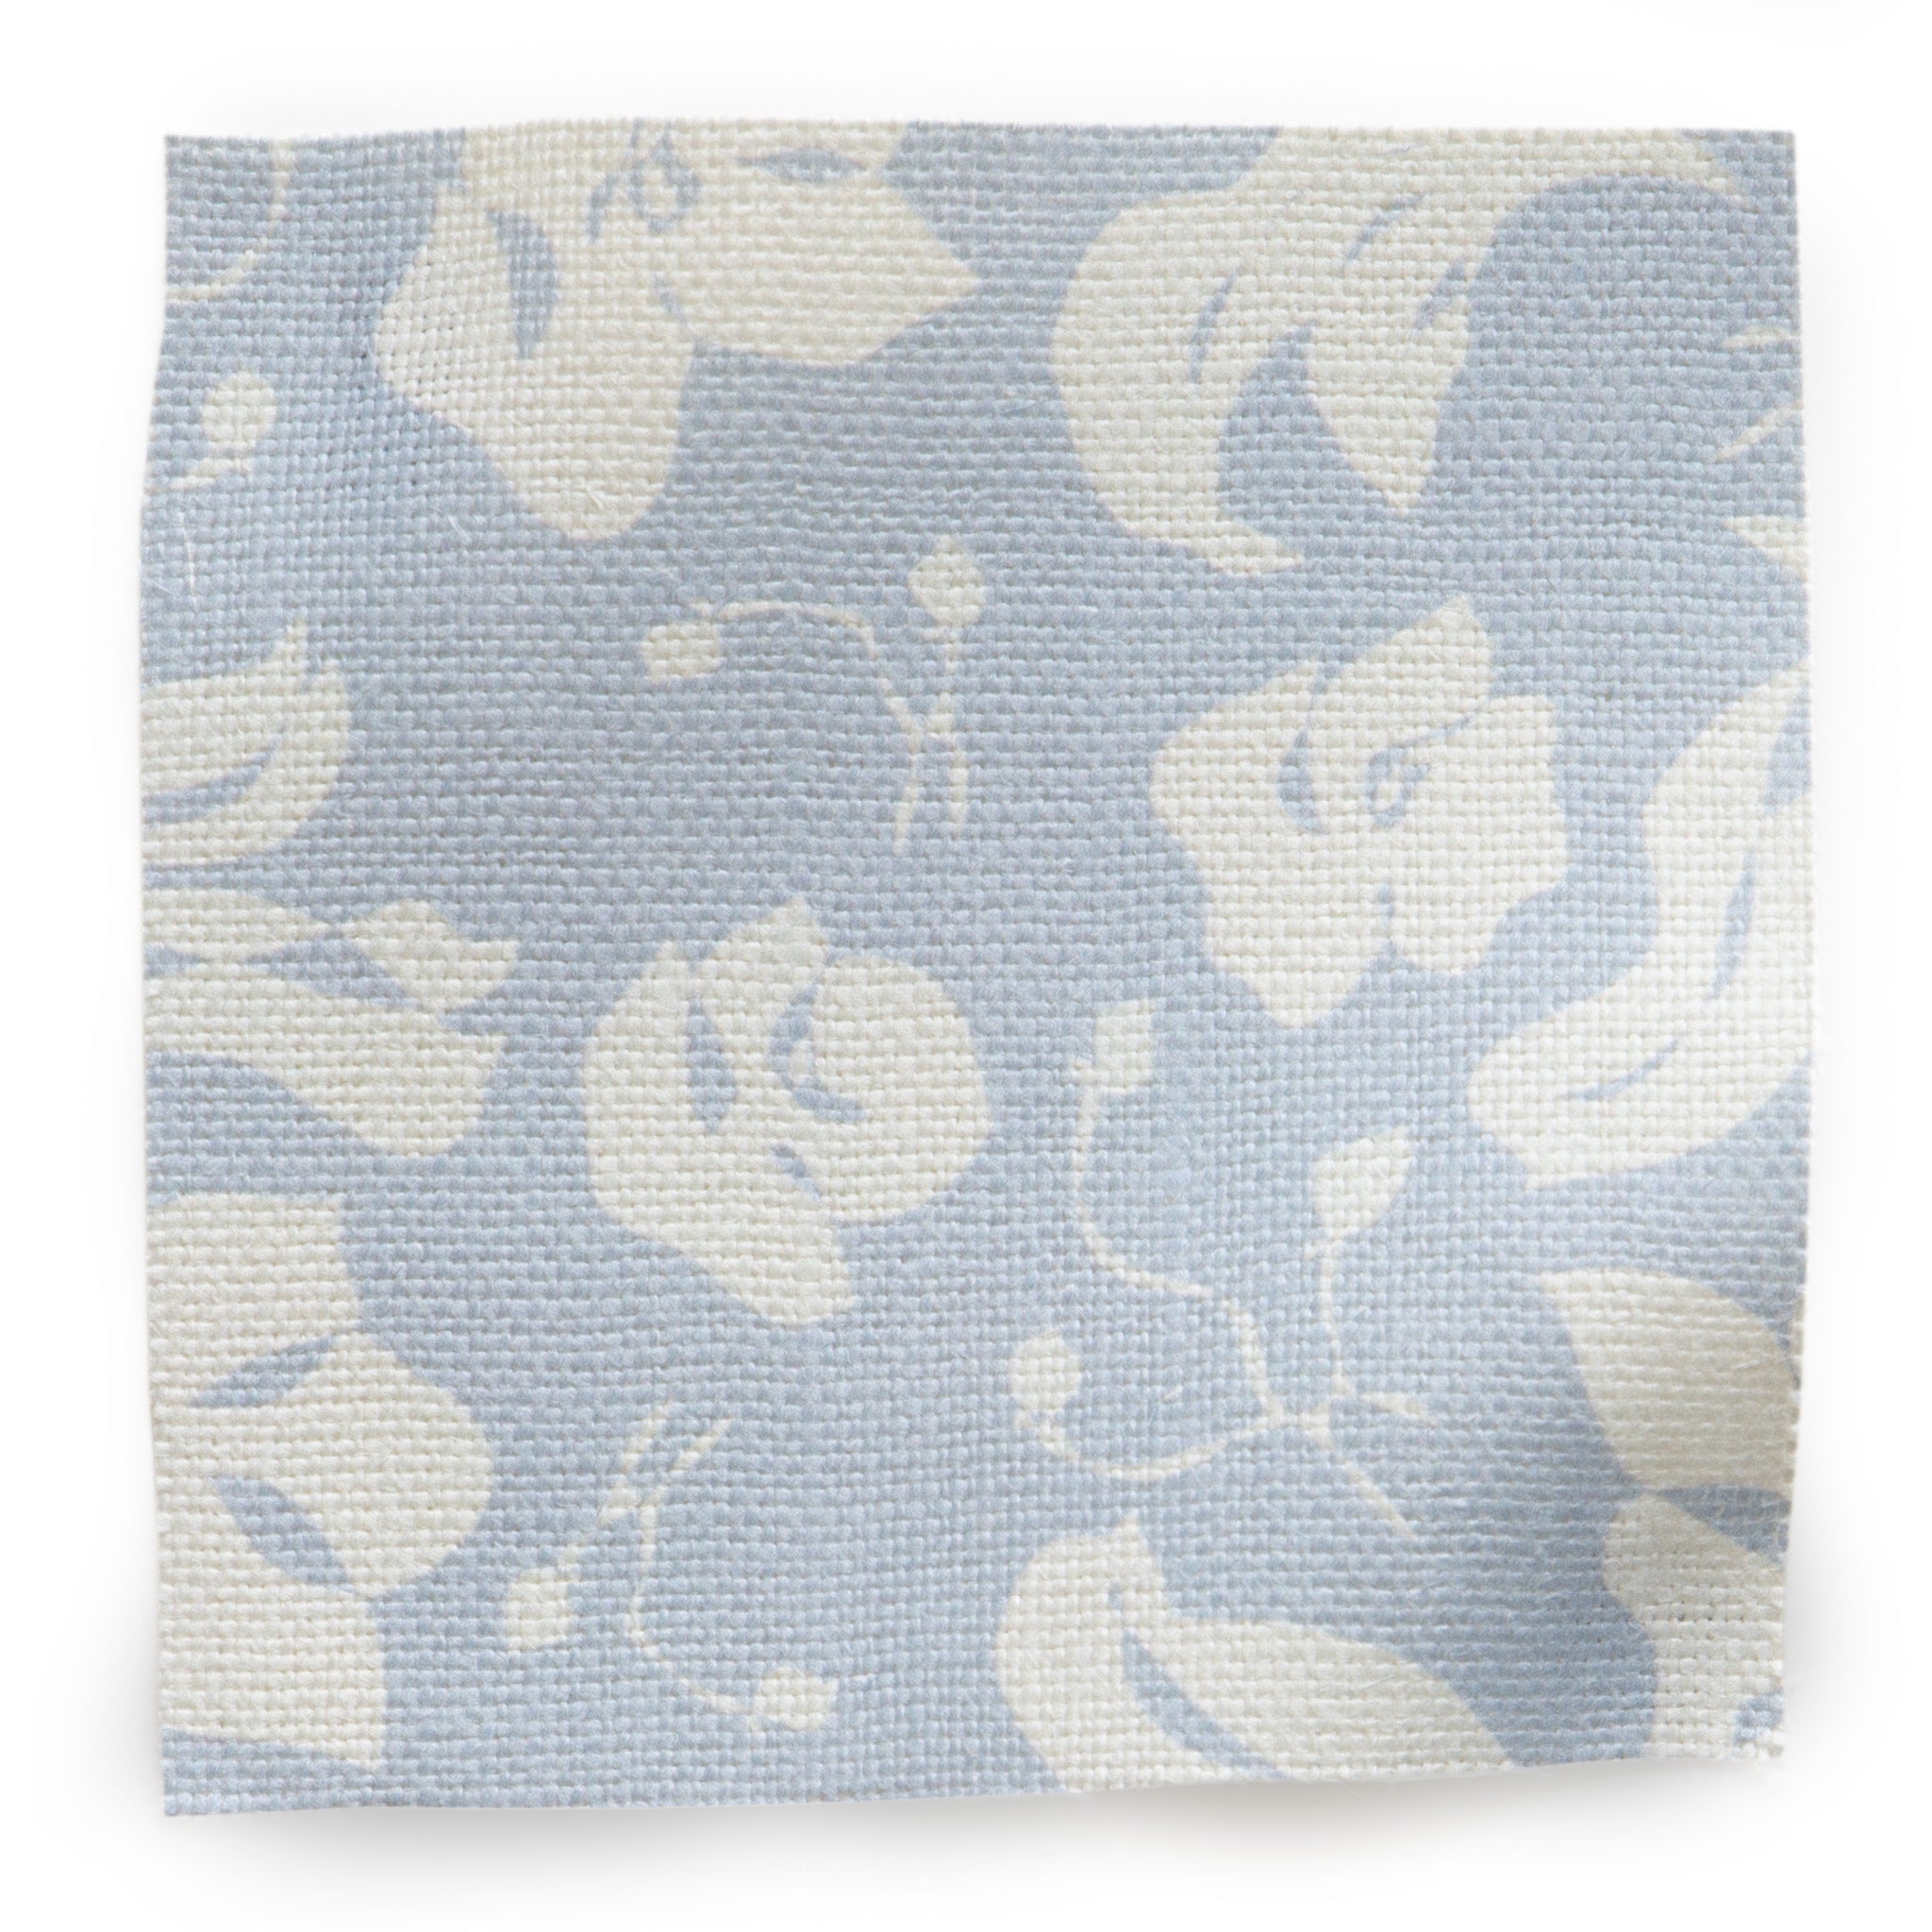 Cornflower Blue Floral Linen Fabric Swatch